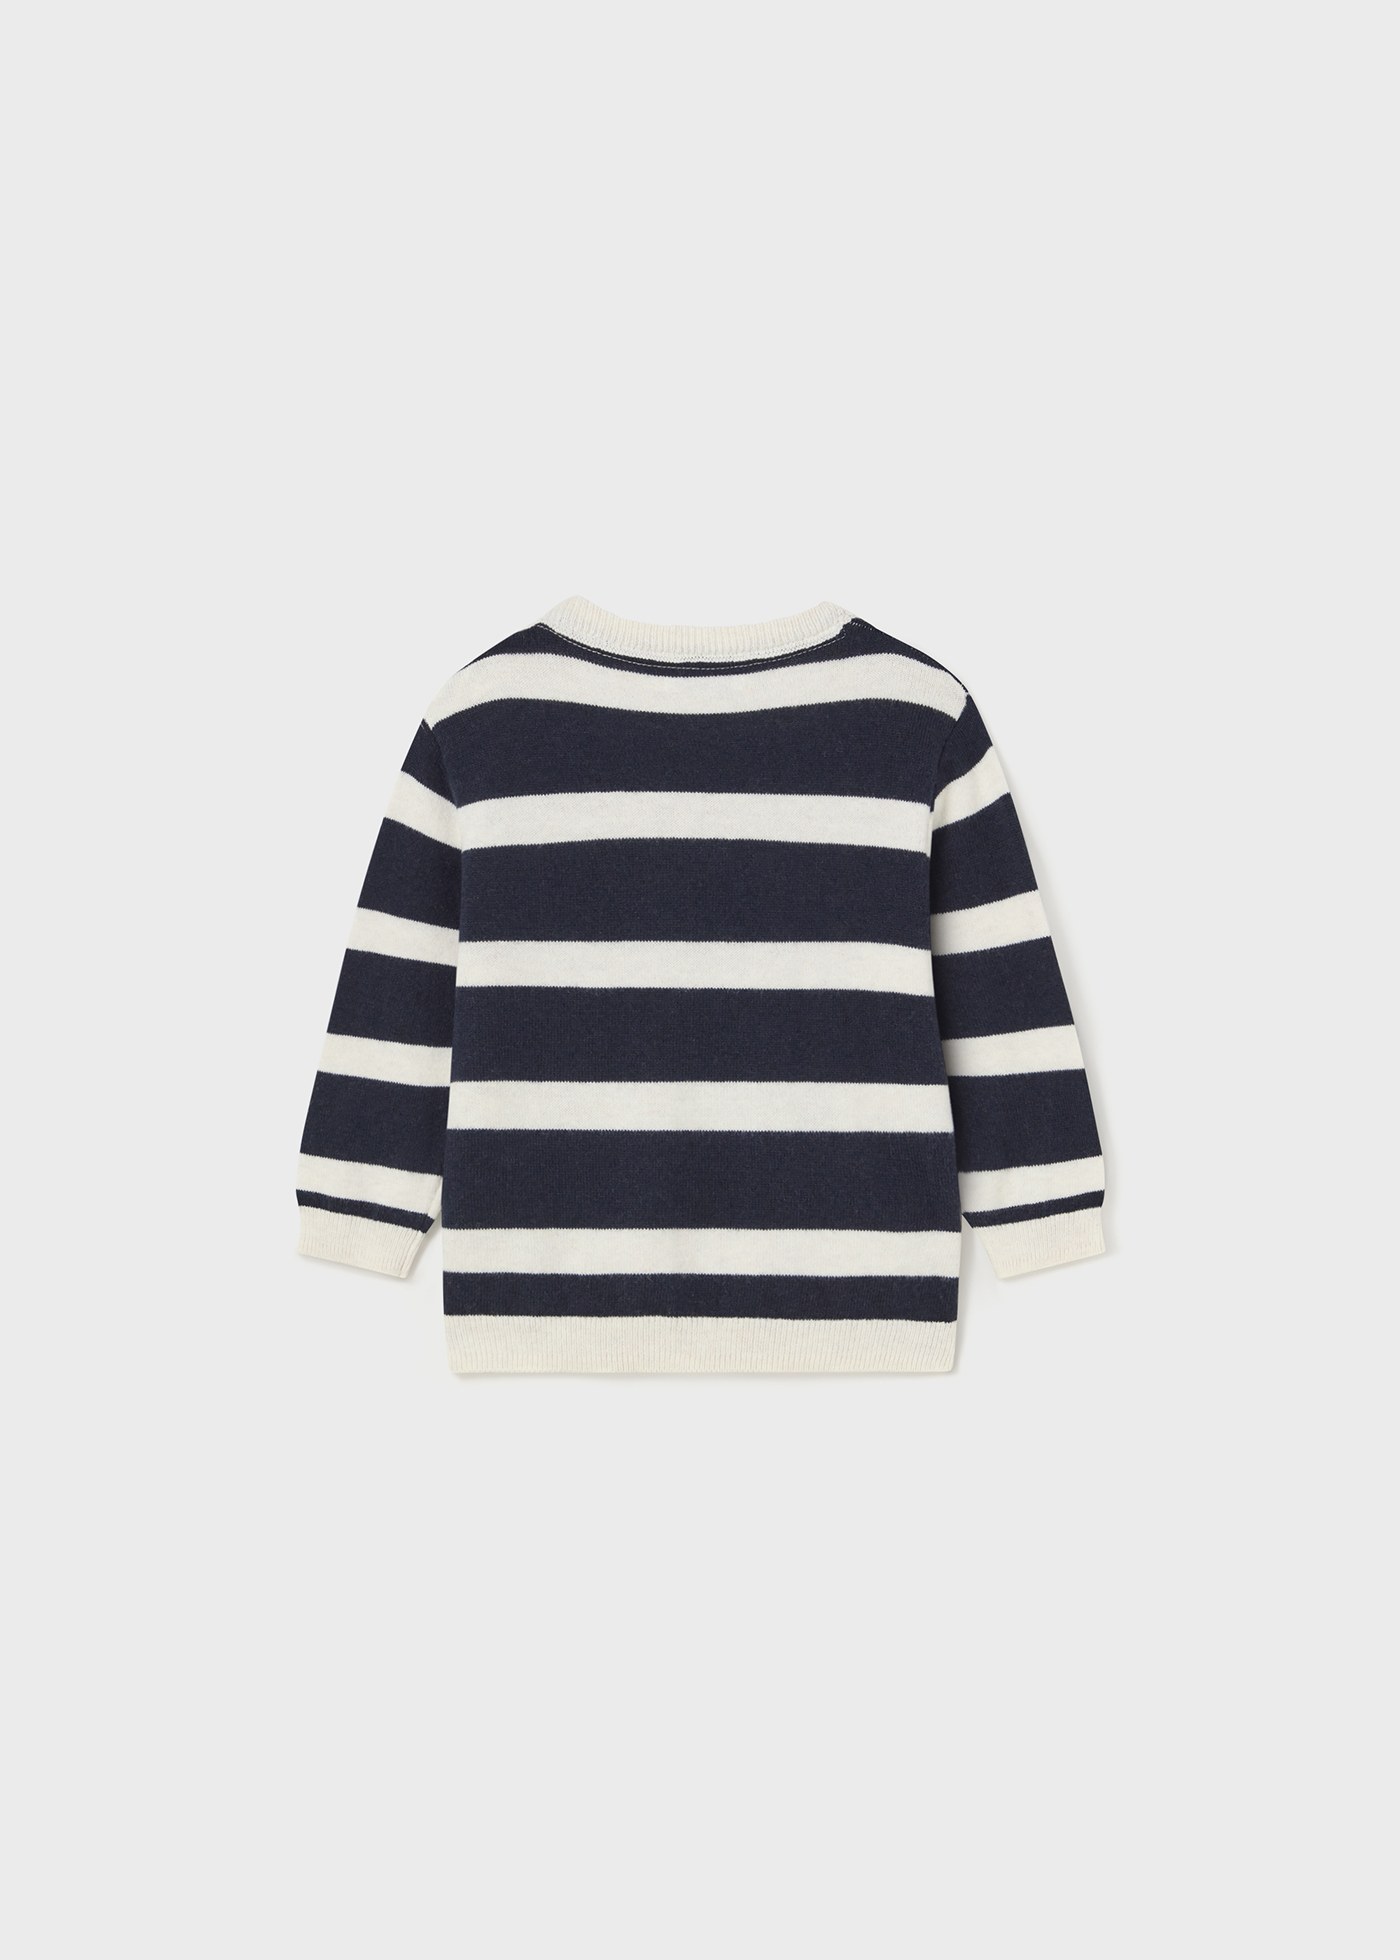 Baby intarsia striped sweater